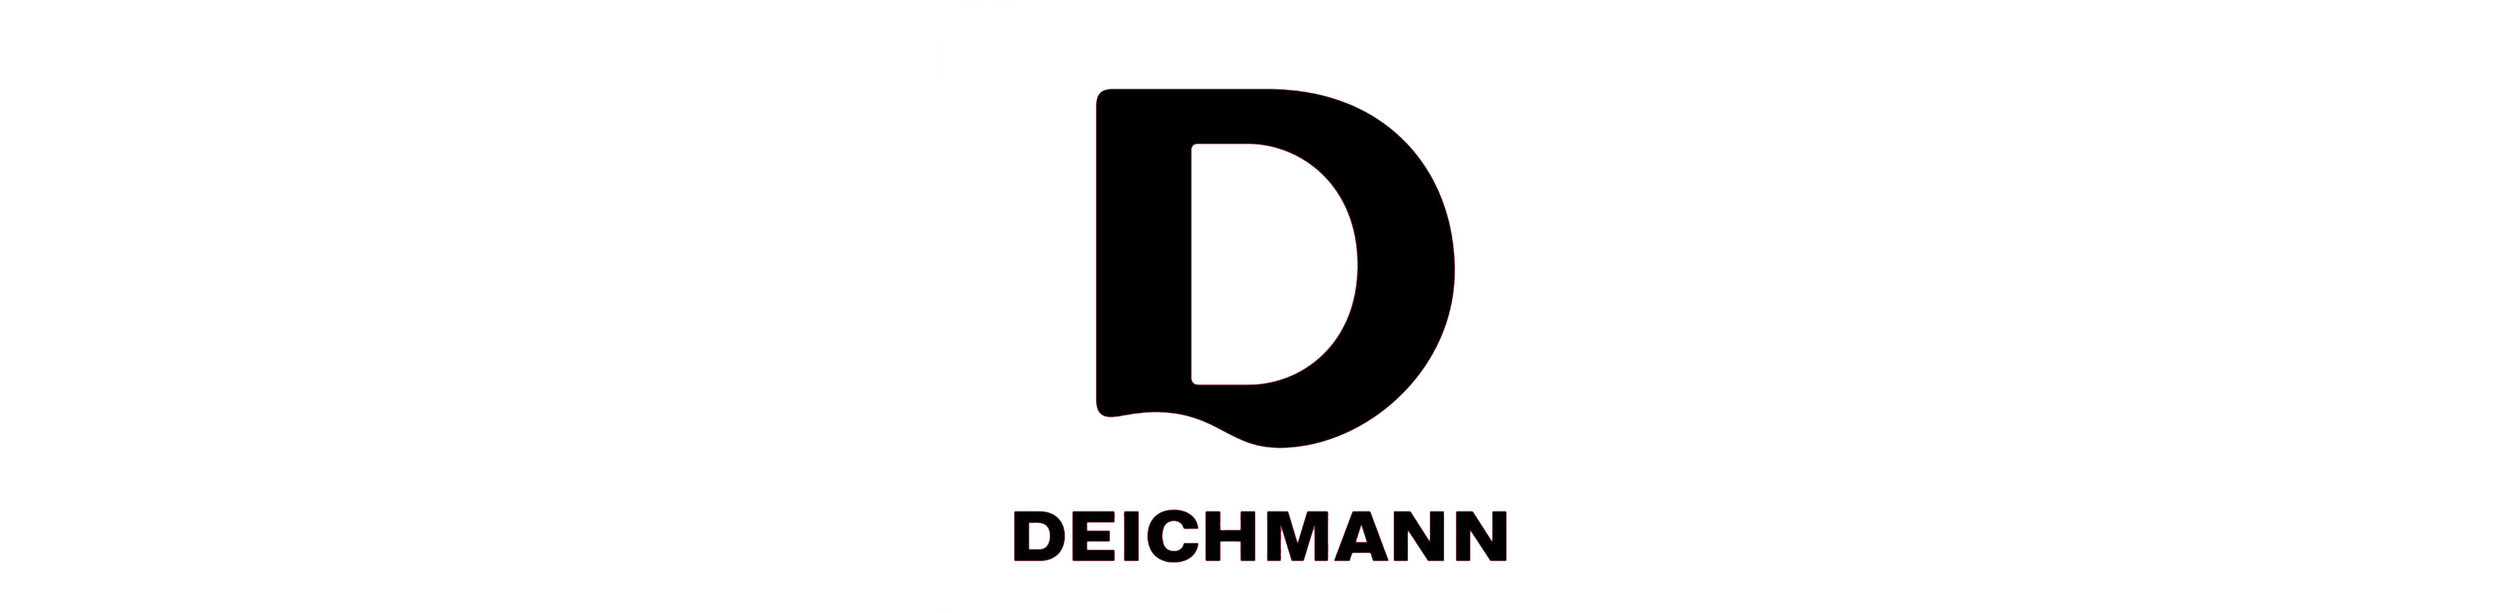 DEICHMANN — Lucid